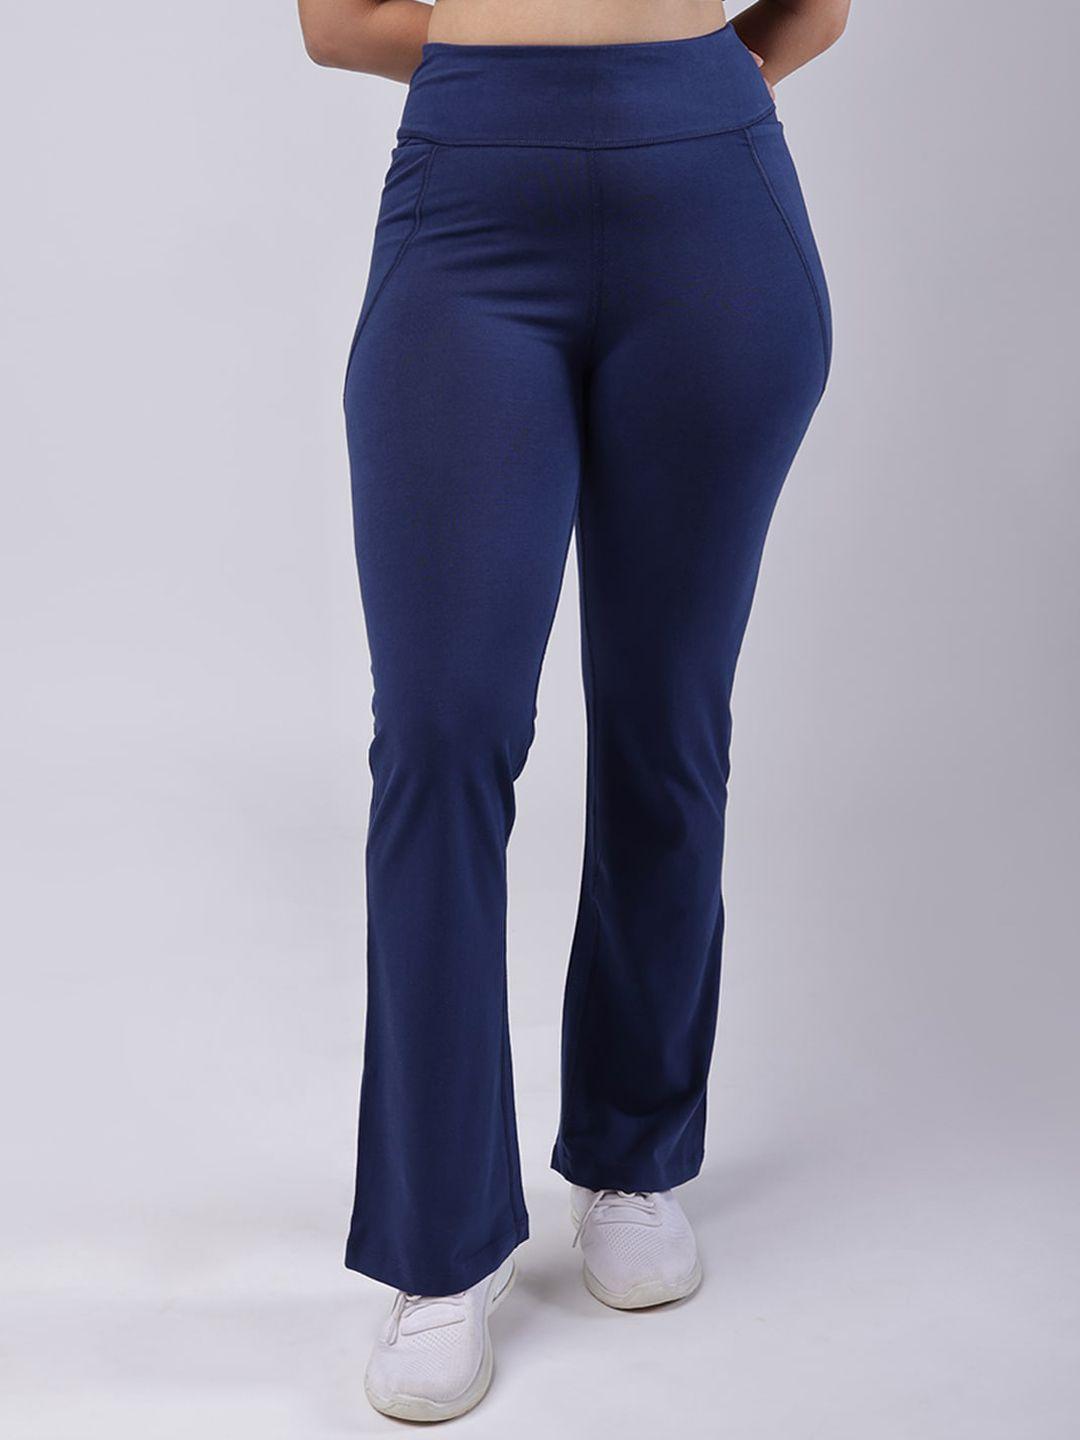 blissclub women navy high waist groove in cotton flare pants